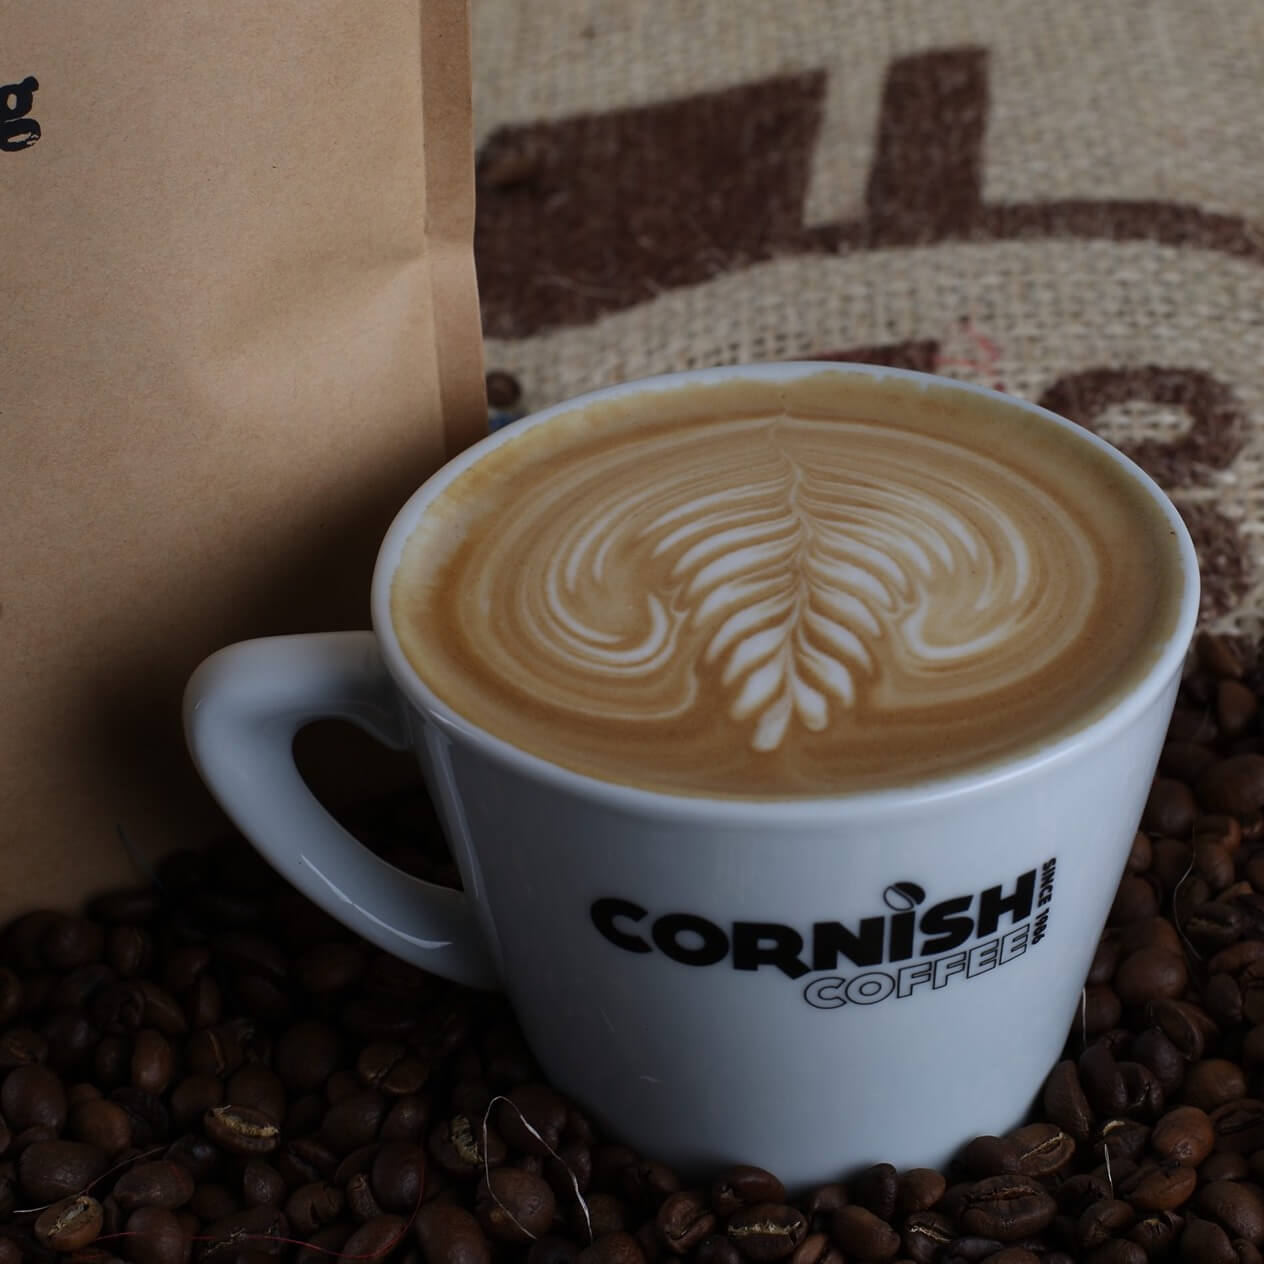 Cornish Coffee Co lifestyle logo